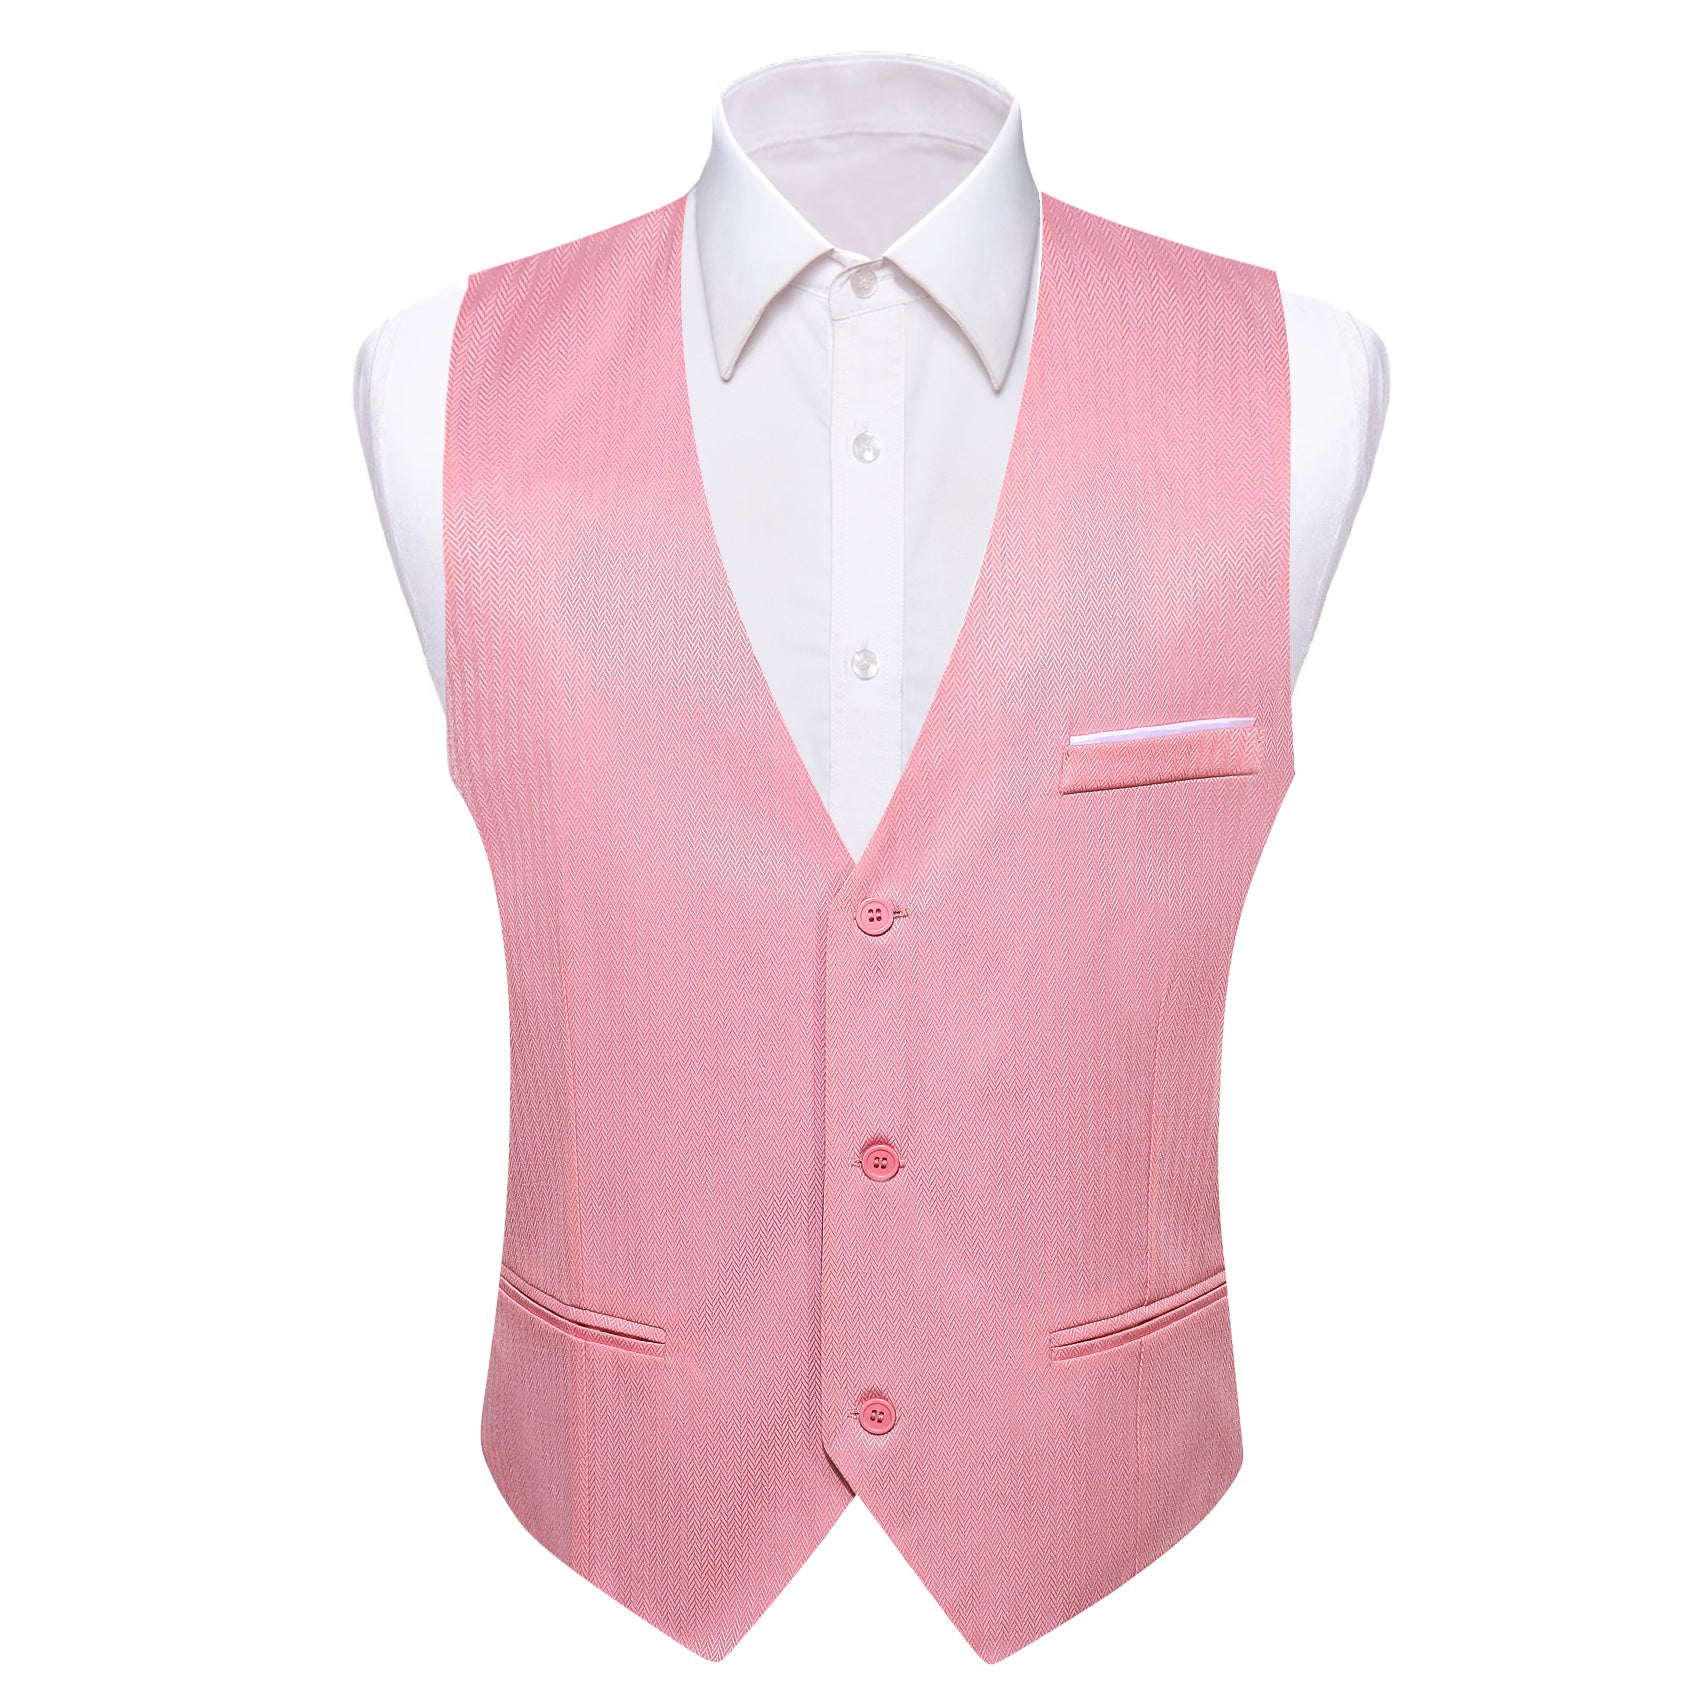 Men's Pink Solid Vest Suit for Business